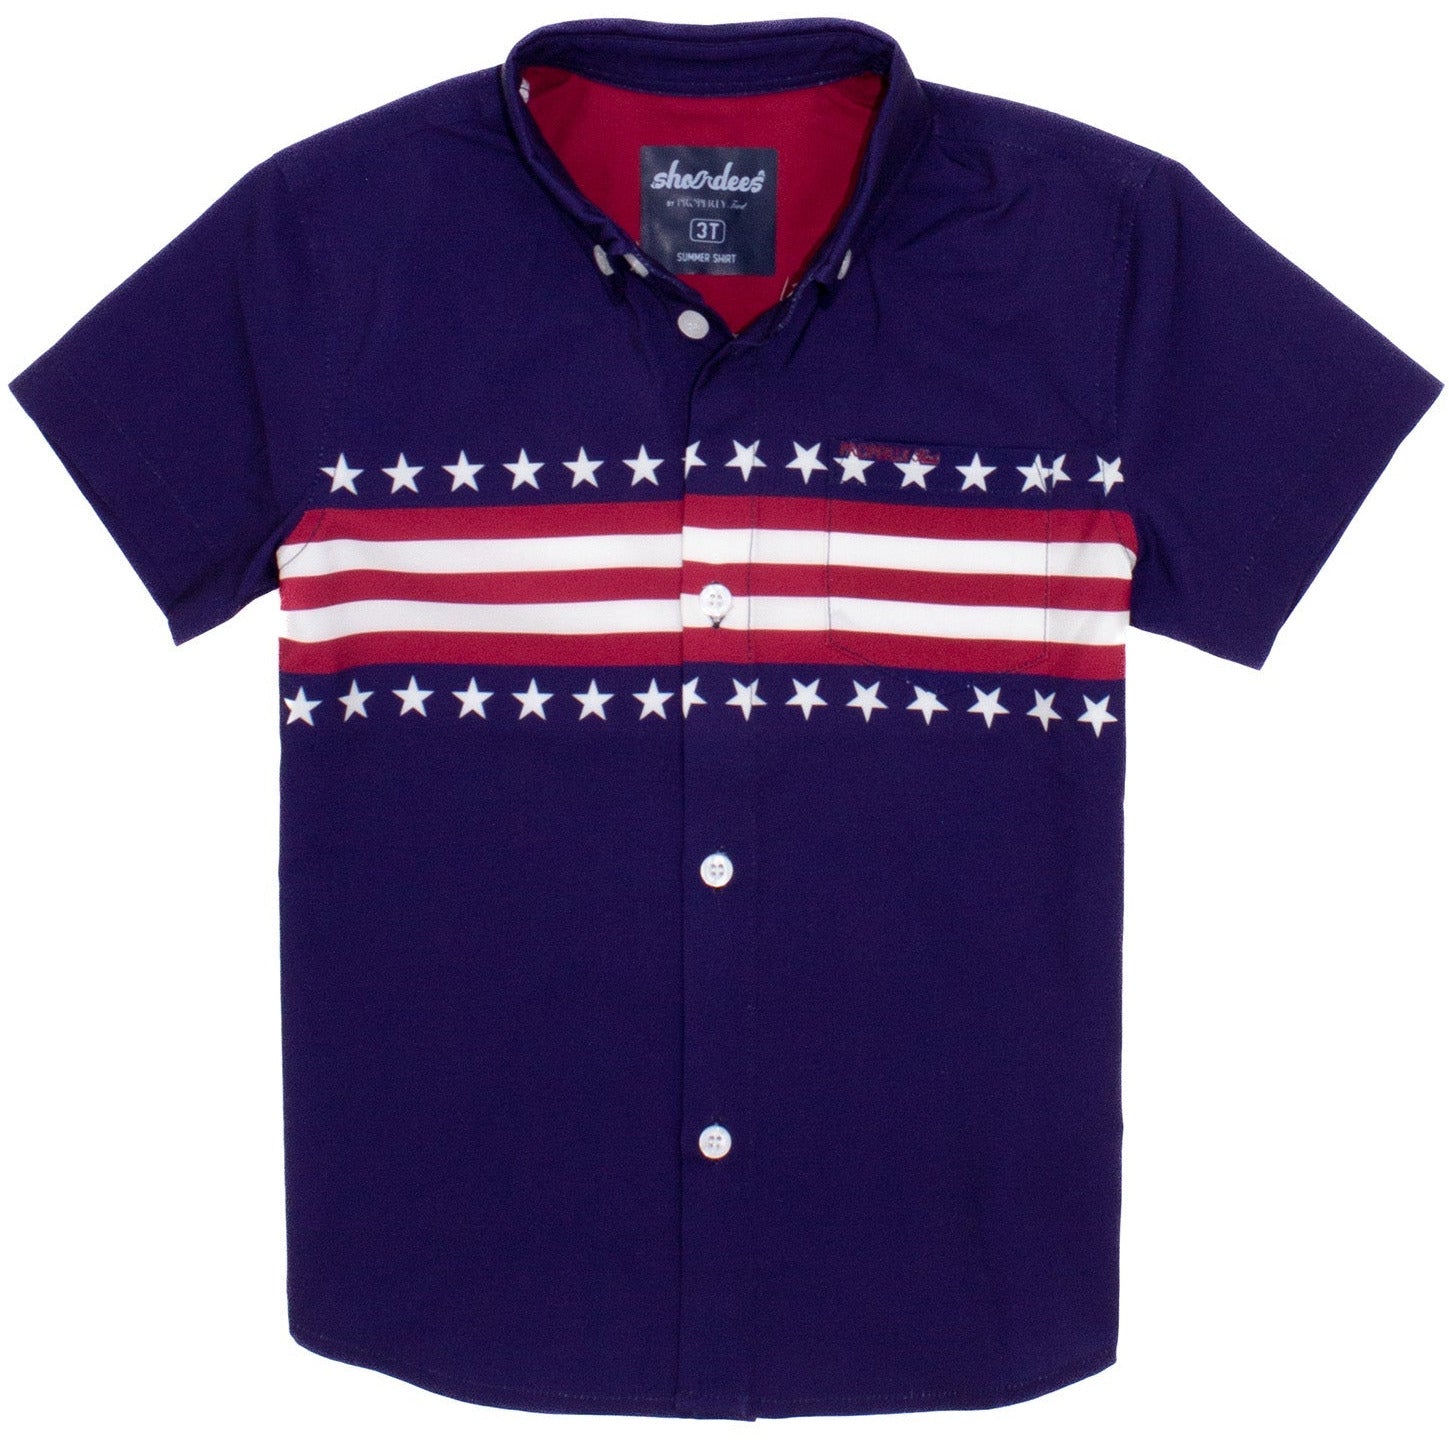 Shordees Summer Shirt - USA - Collins & Conley